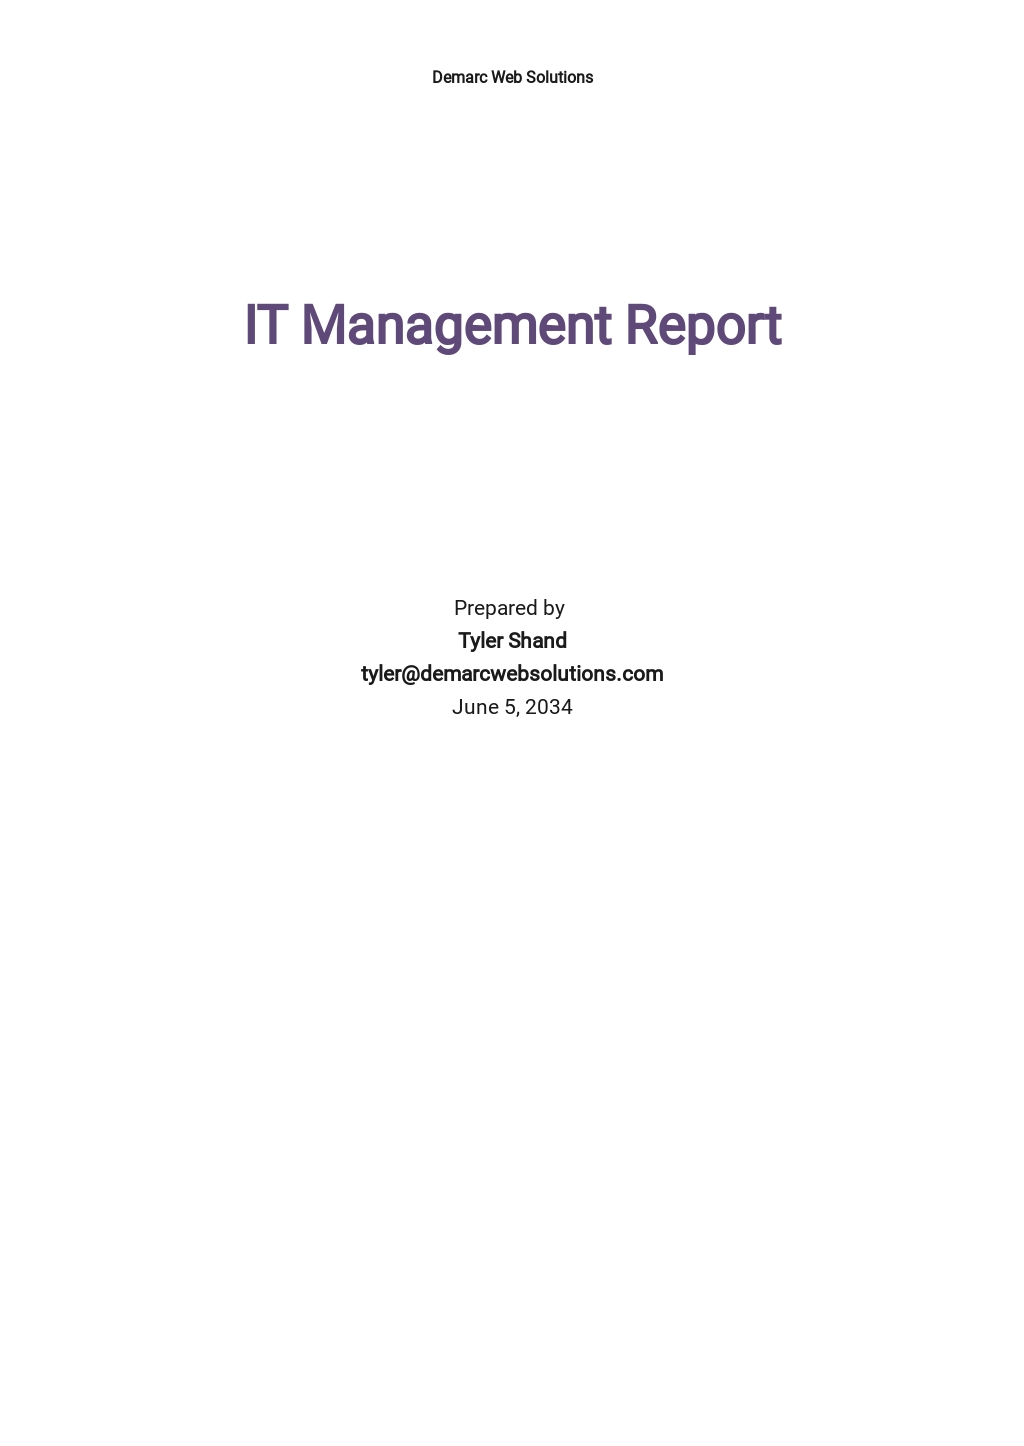 IT Management Report Template.jpe